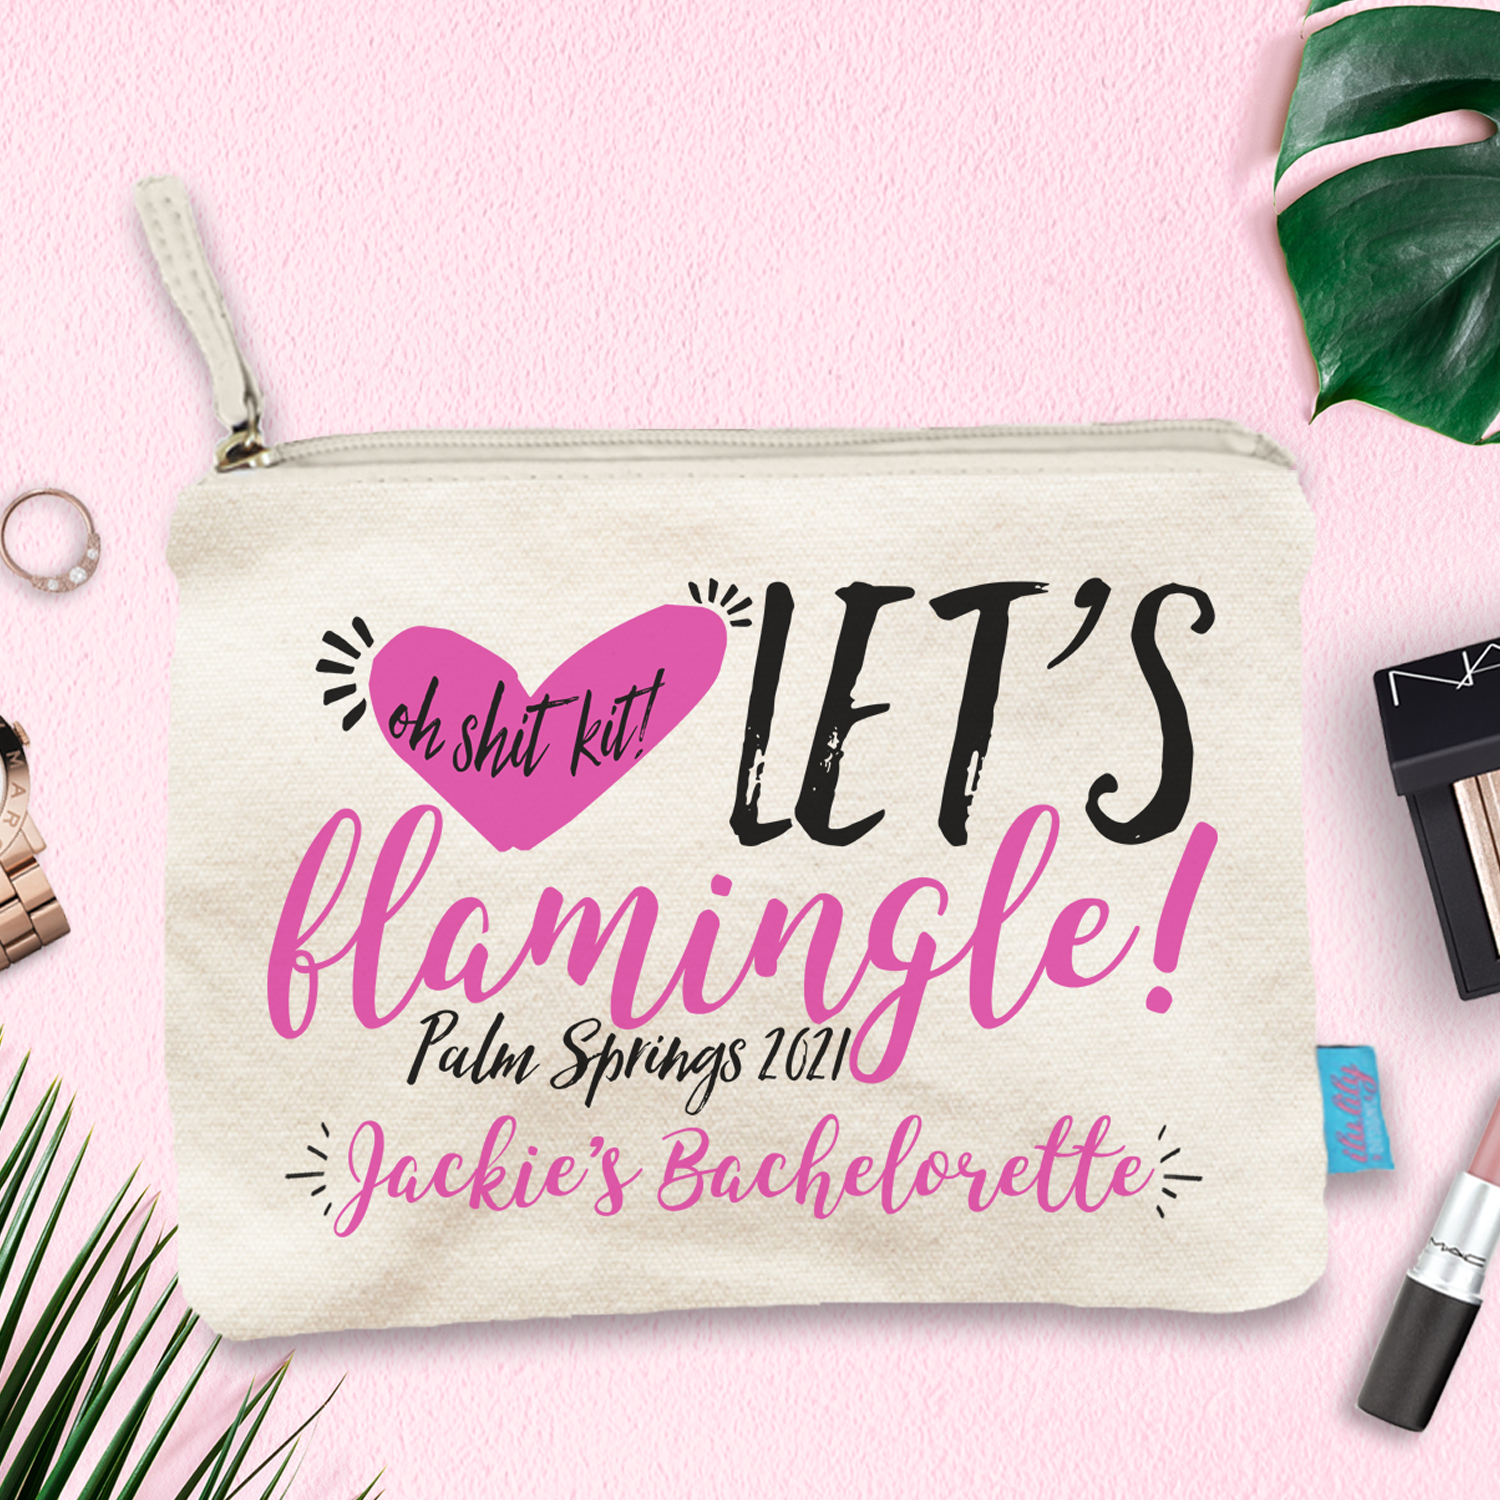 Bachelorette Party Makeup Bag Favor | Personalized Cosmetic Bag | Let's Flamingle Oh Shit Kit